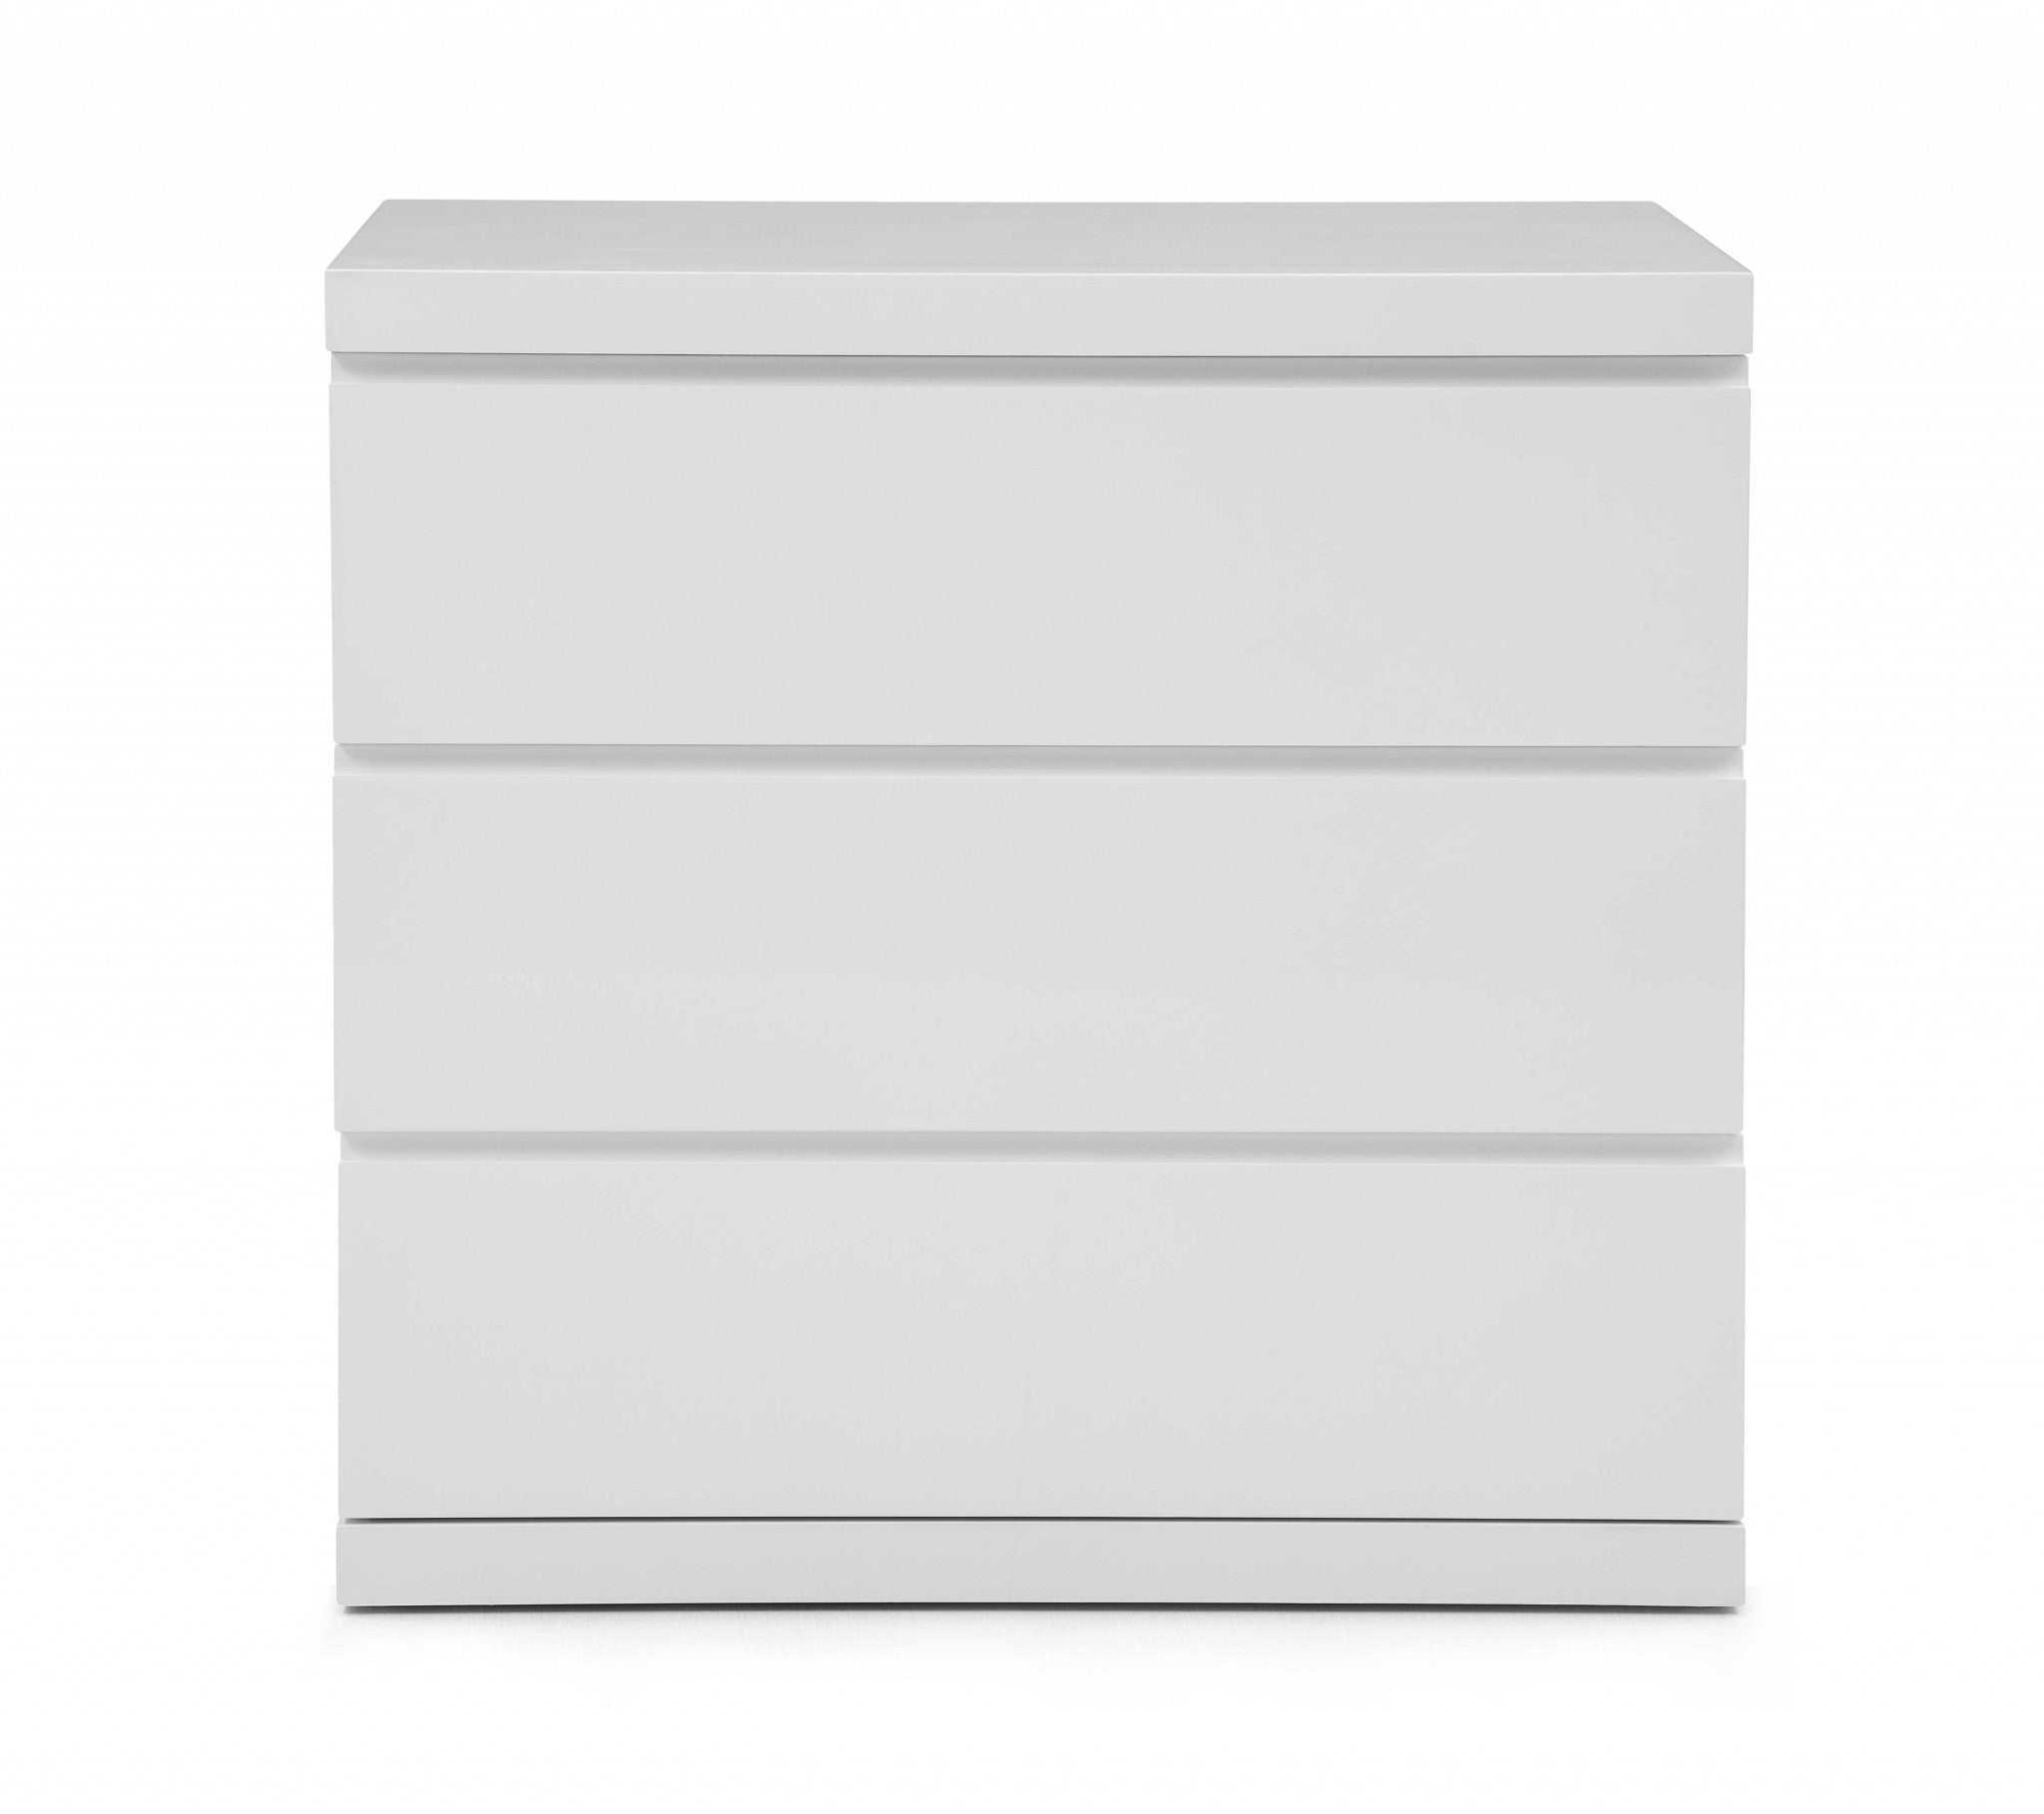 31 X 20 X 30 White Double Dresser Extension